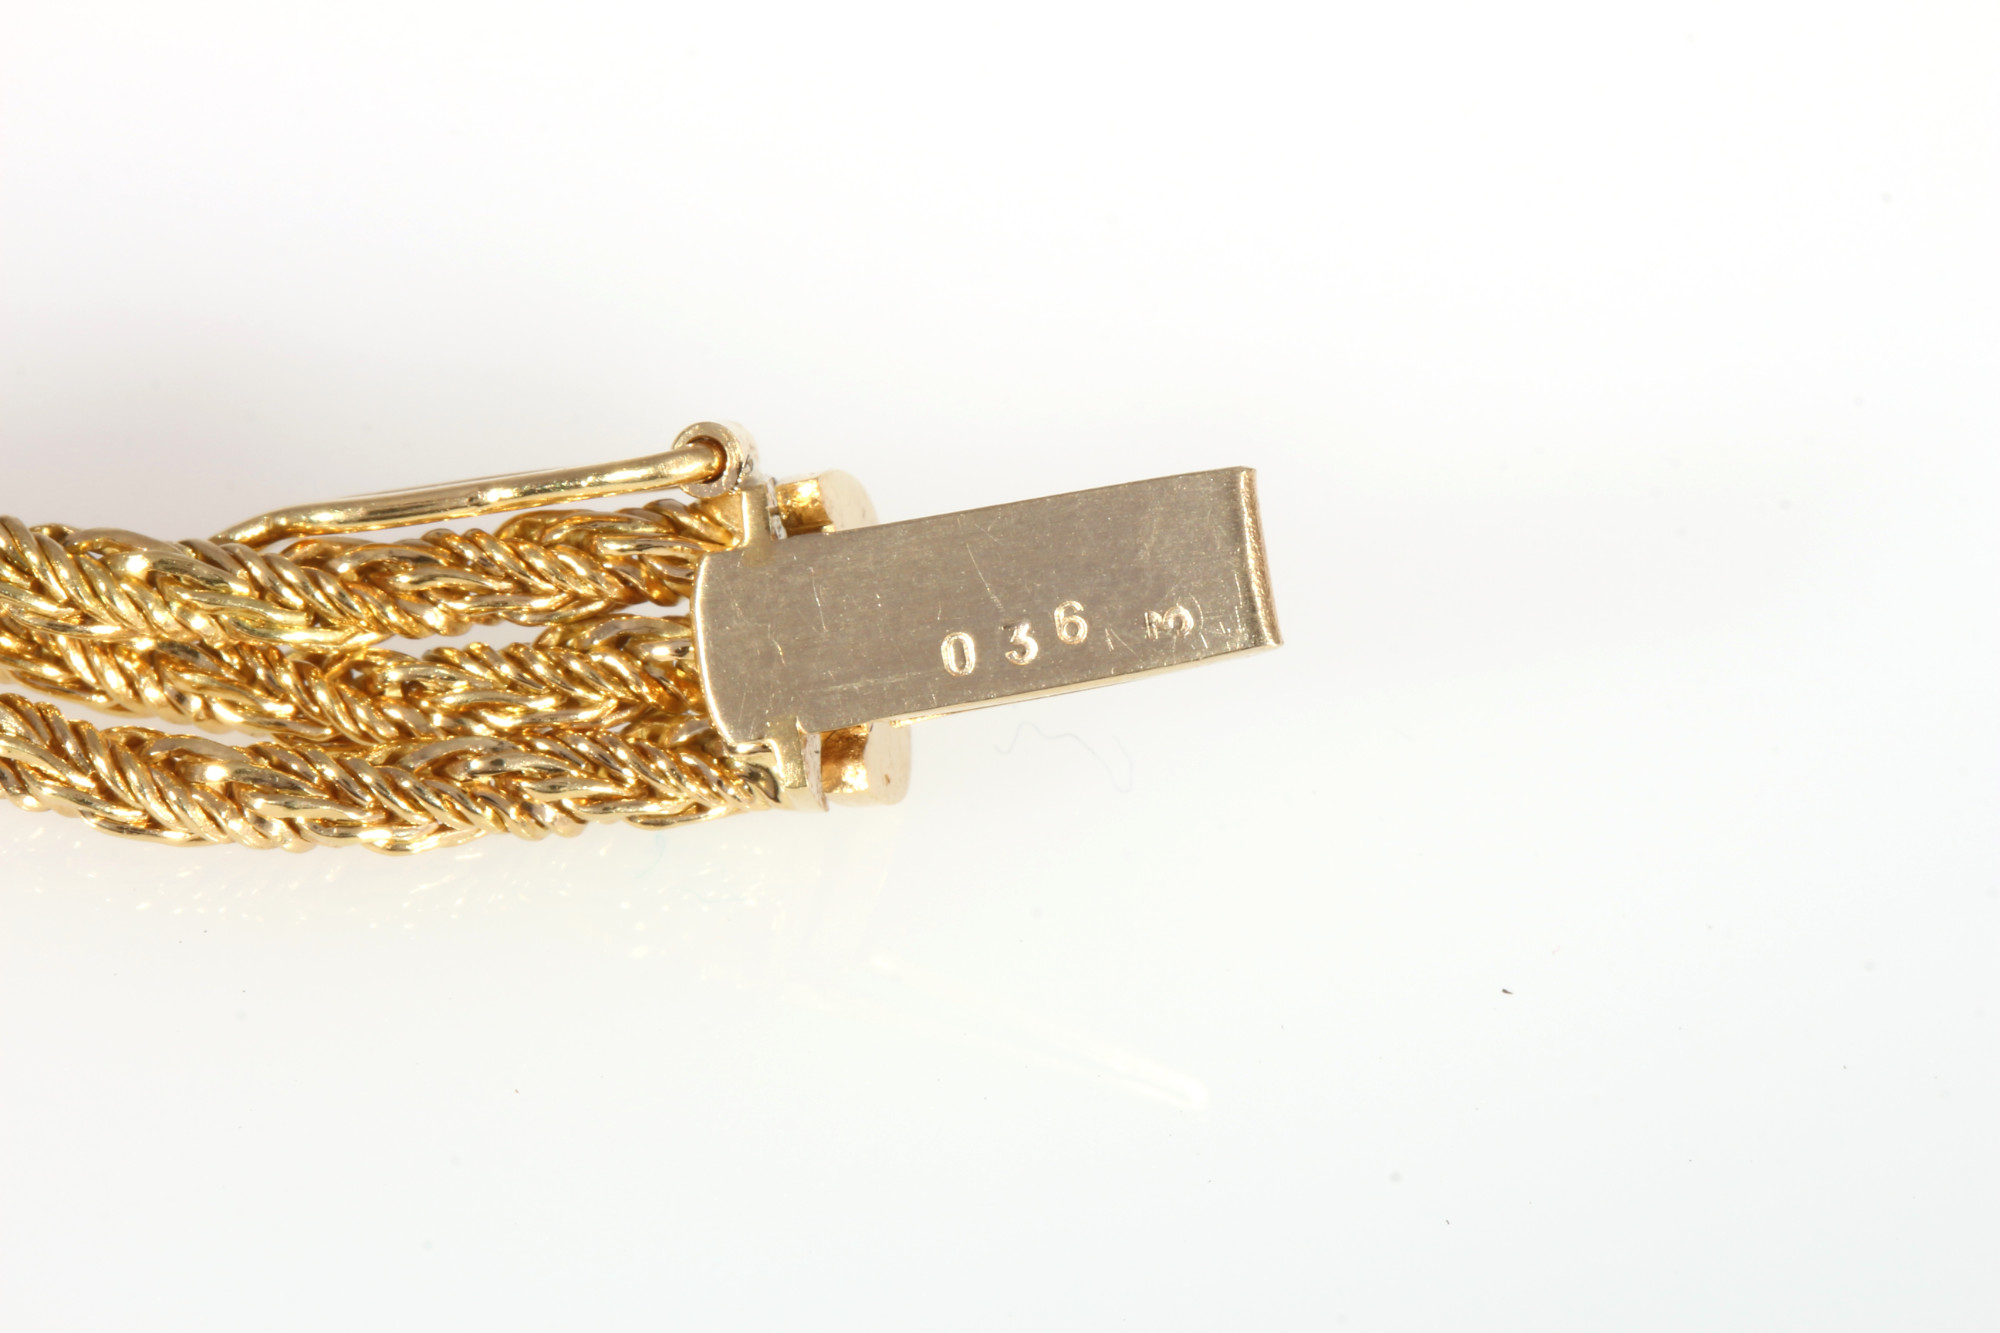 750 gold / 950 platinum diamond necklace and bracelet, cord, 18K Gold / 950 Platin Brillanten Coll - Image 4 of 5